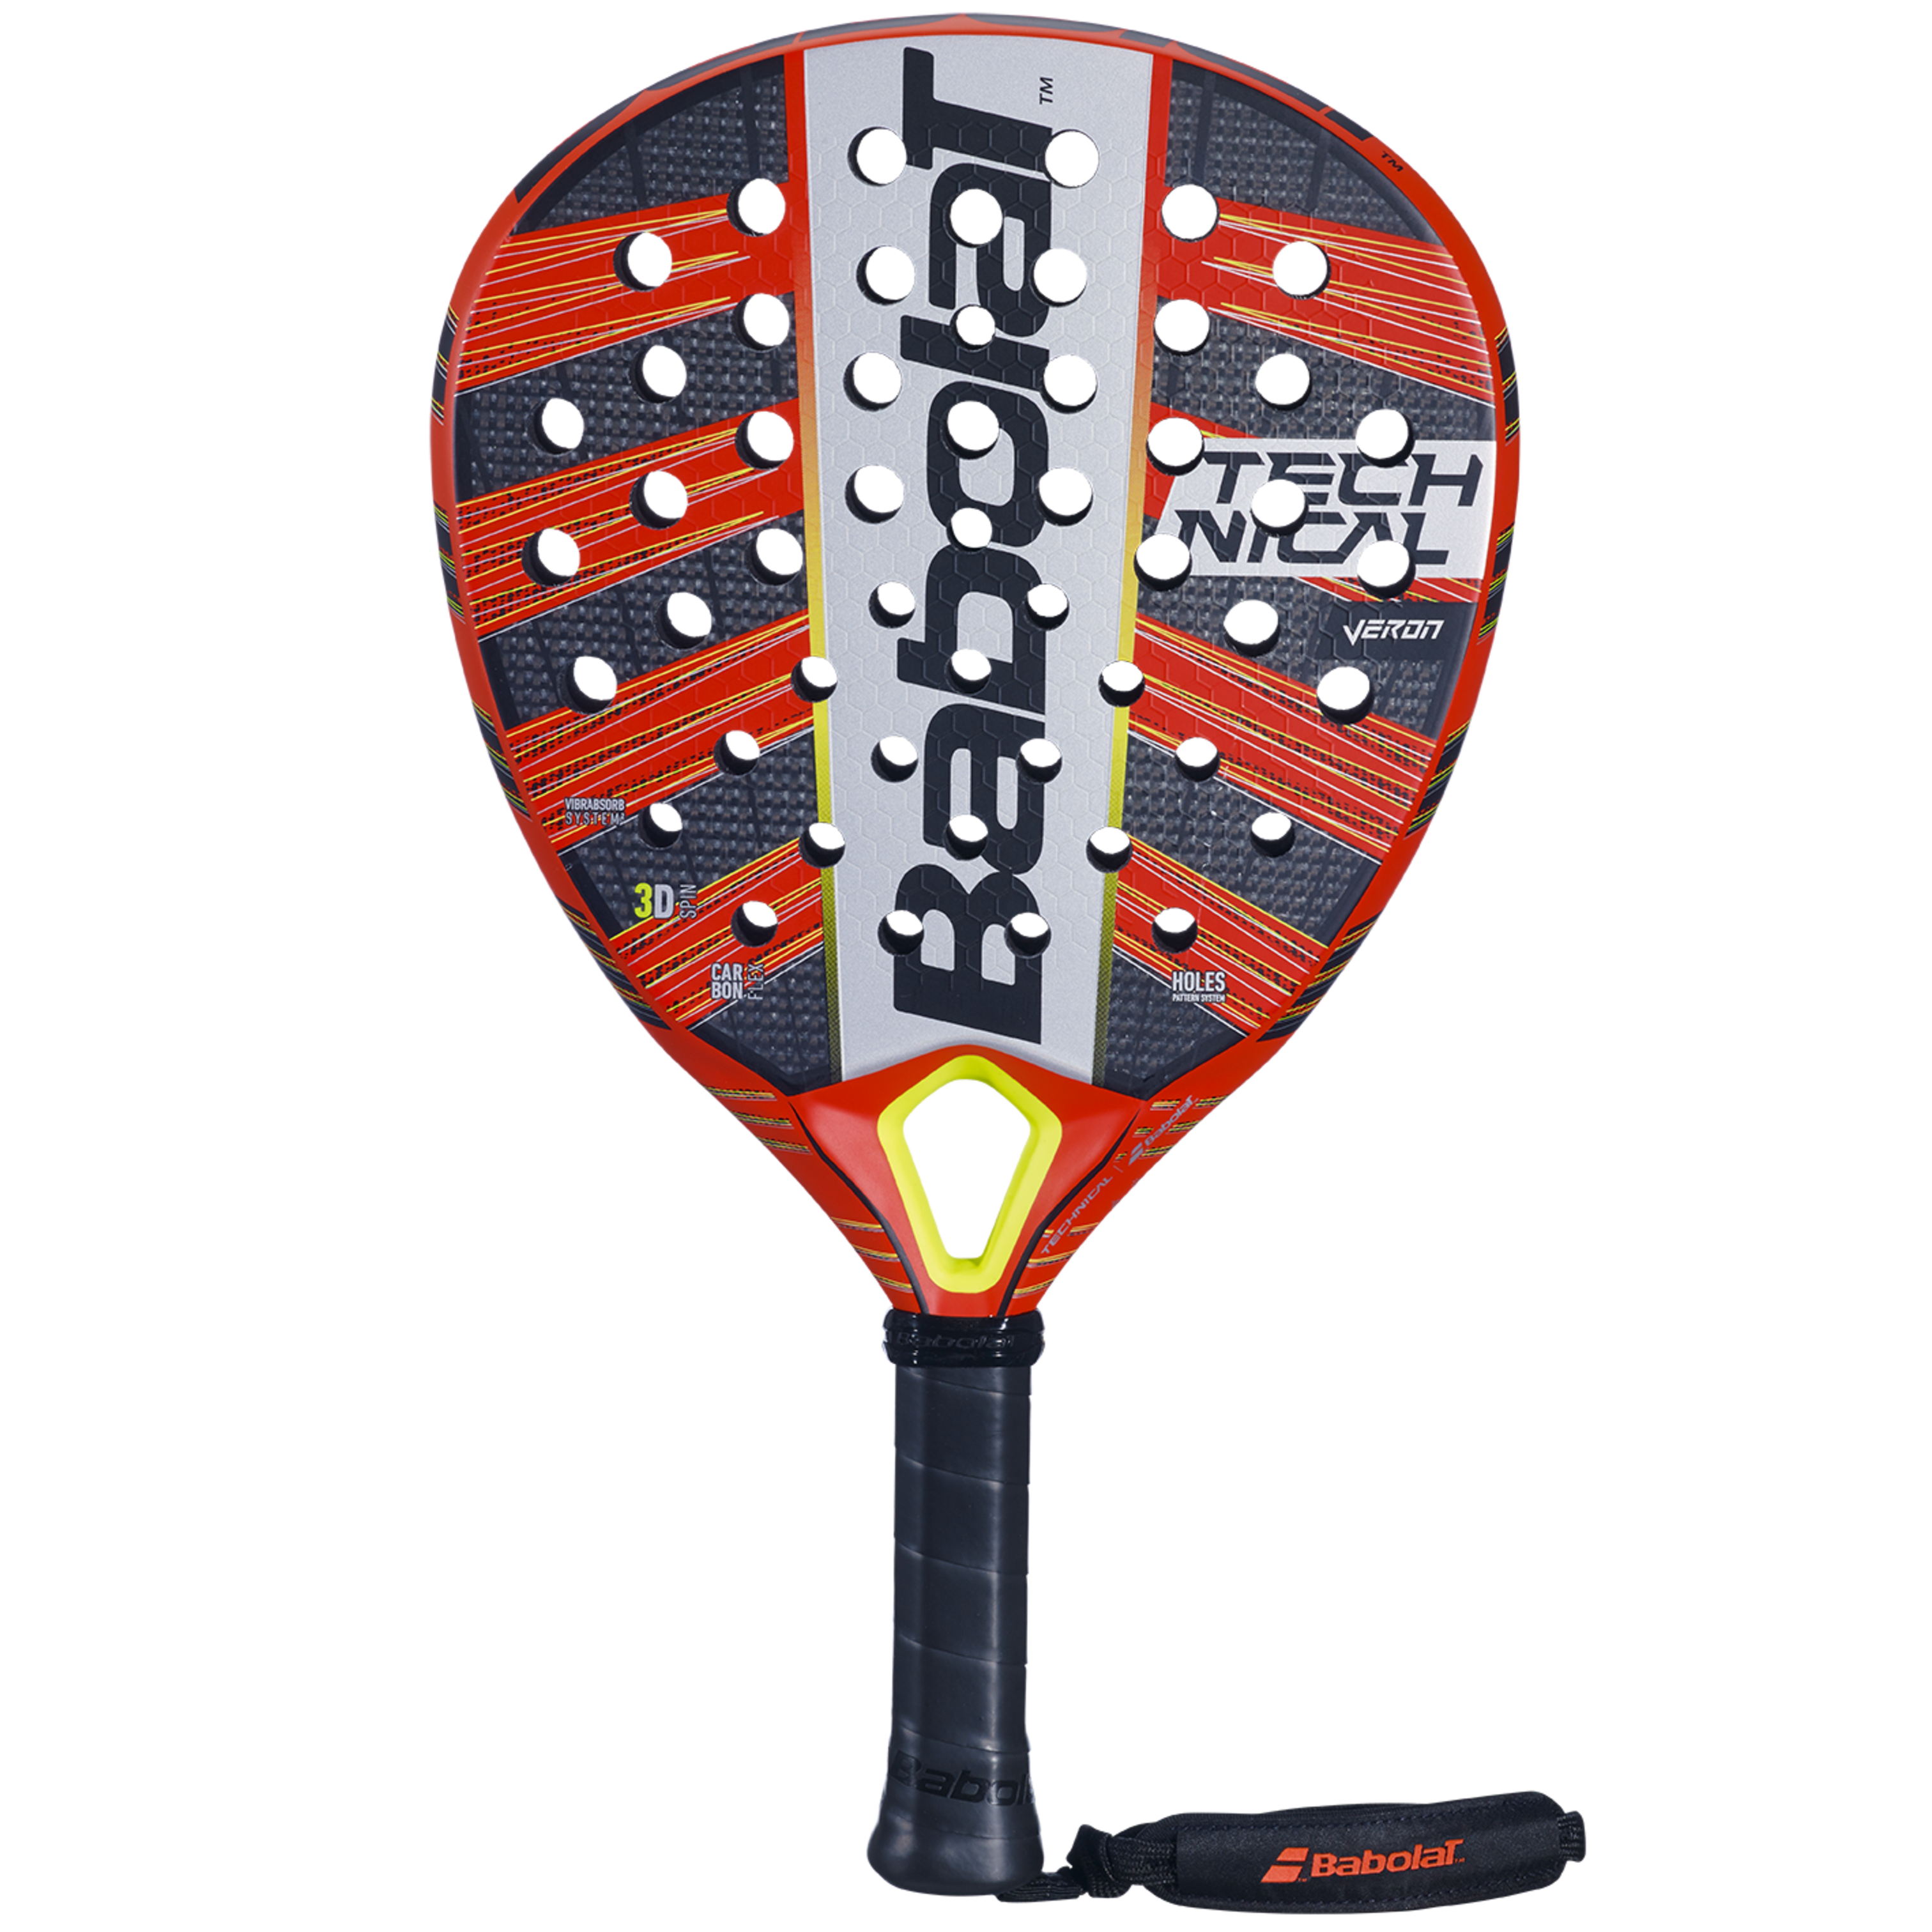 Babolat Technical Veron padel racket.